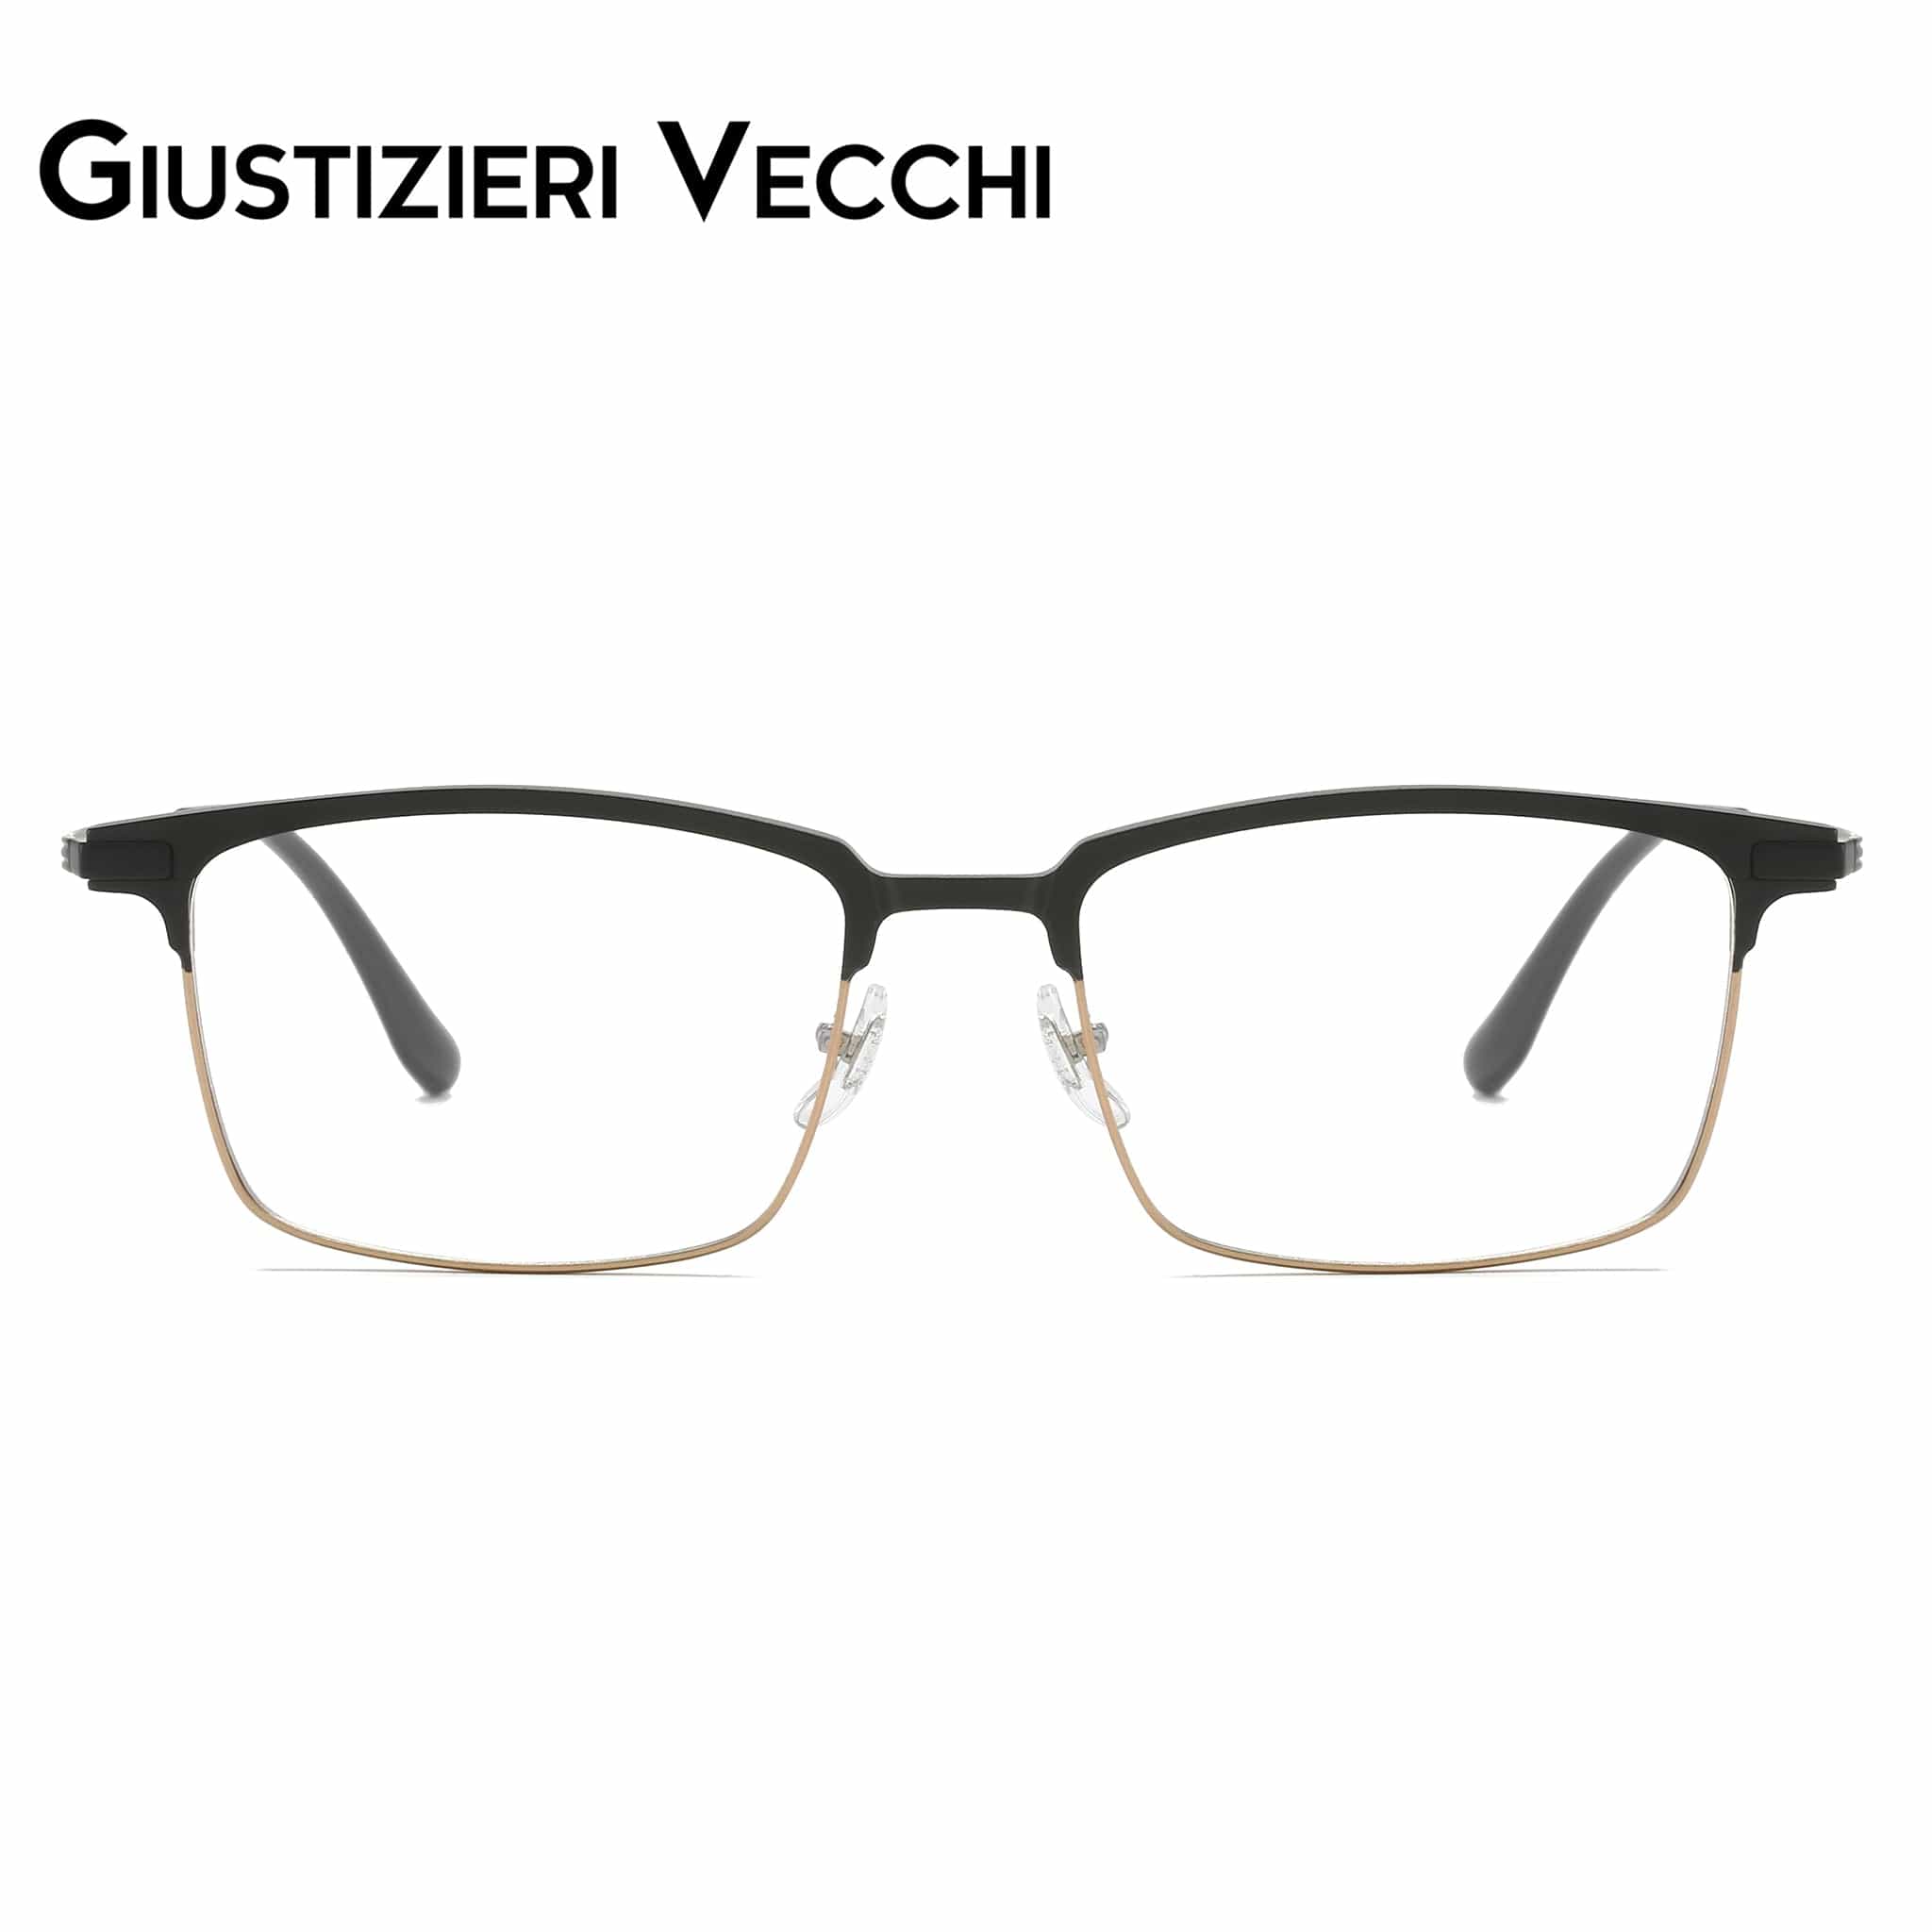 GIUSTIZIERI VECCHI Eyeglasses Medium / Black with Gold AuroraBloom Uno